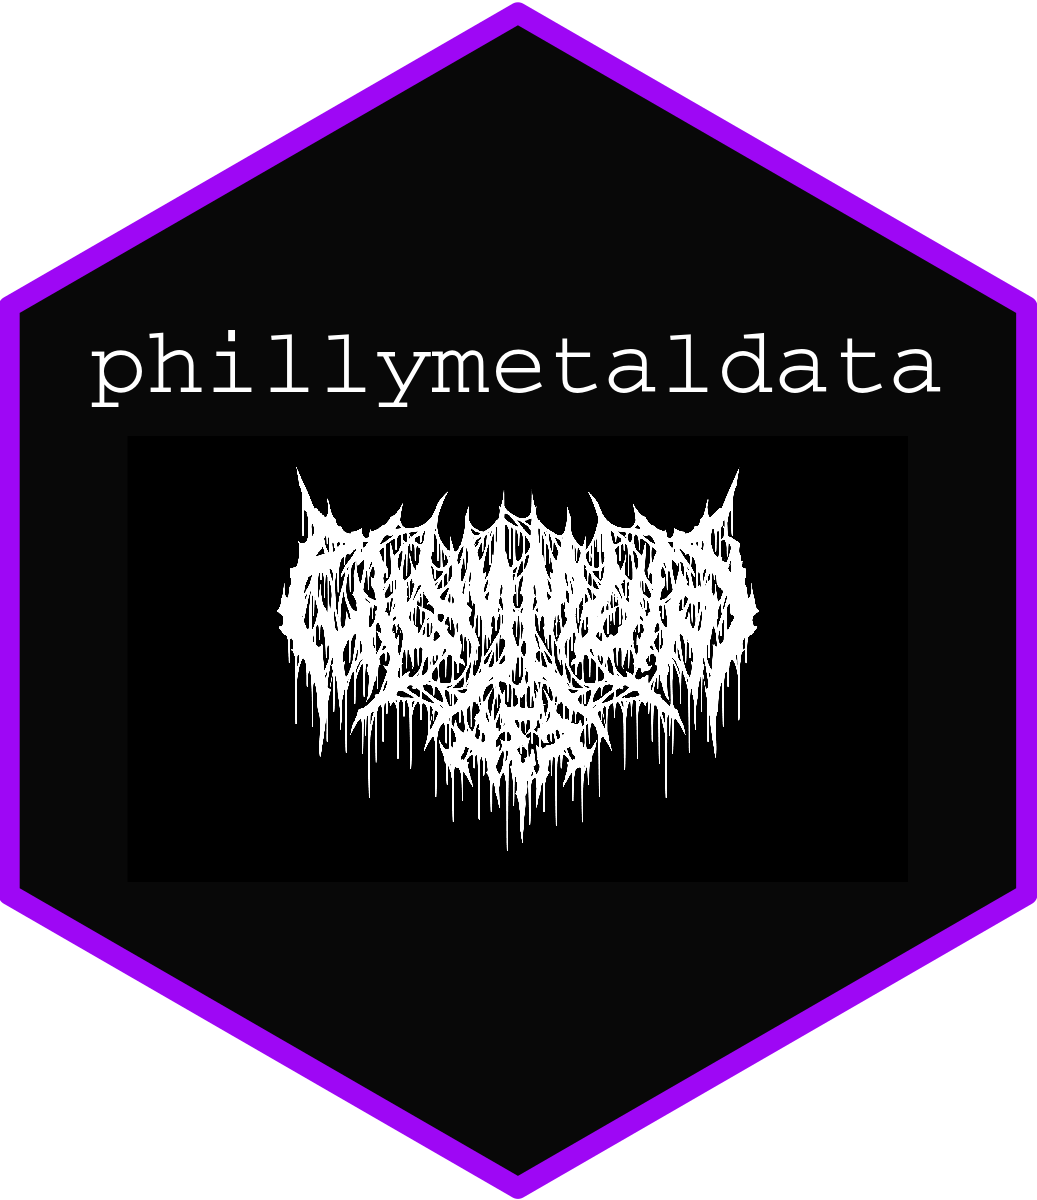 phillymetaldata R package hex logo